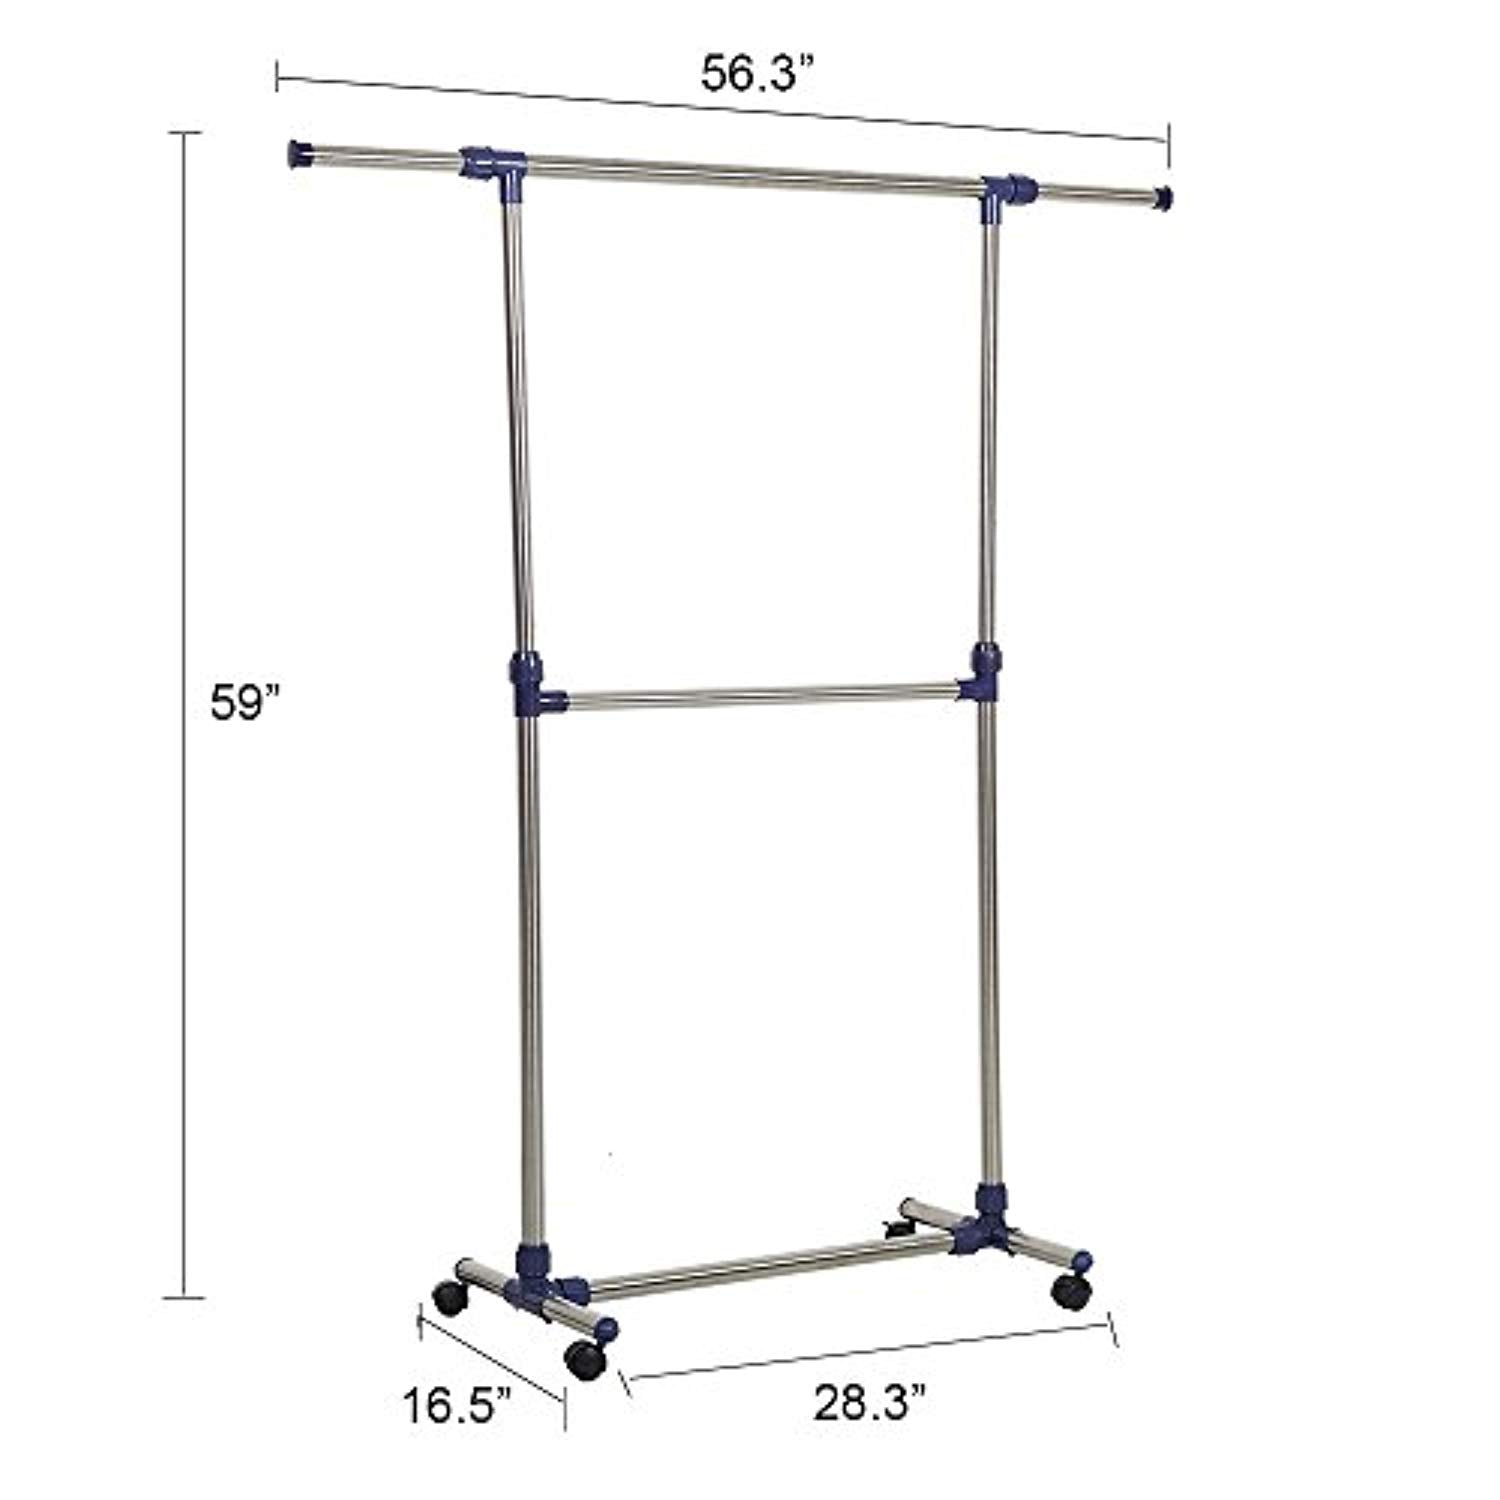 Bosonshop Single Rail Adjustable Clothes rack Lightweight Sturdy Hanging Garment Rack With Wheels